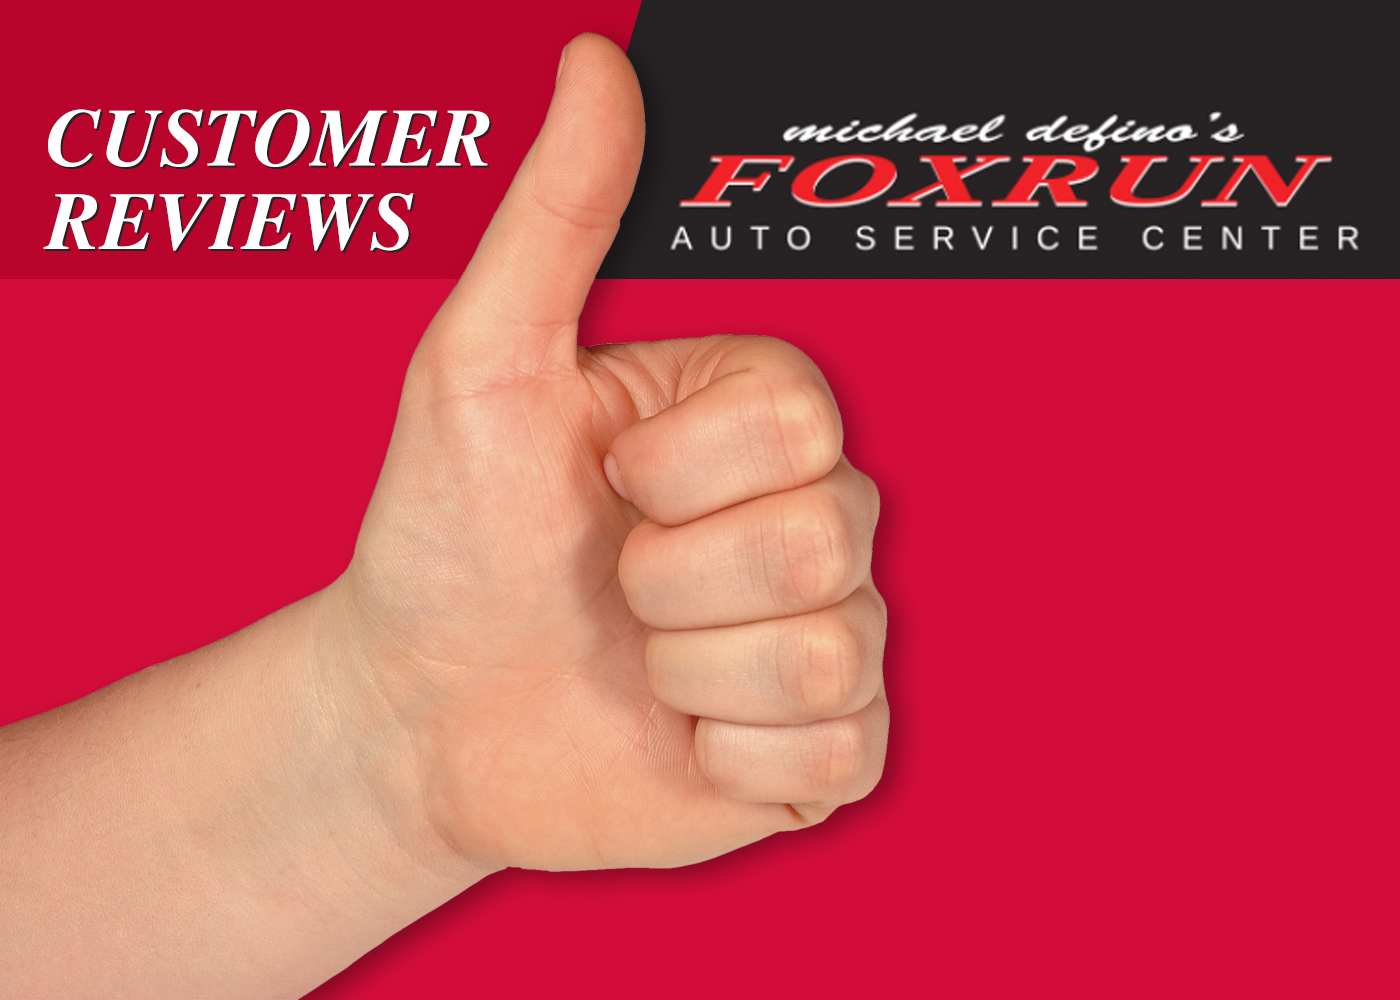 Longtime Customer Appreciates Excellent Service at Fox Run Auto